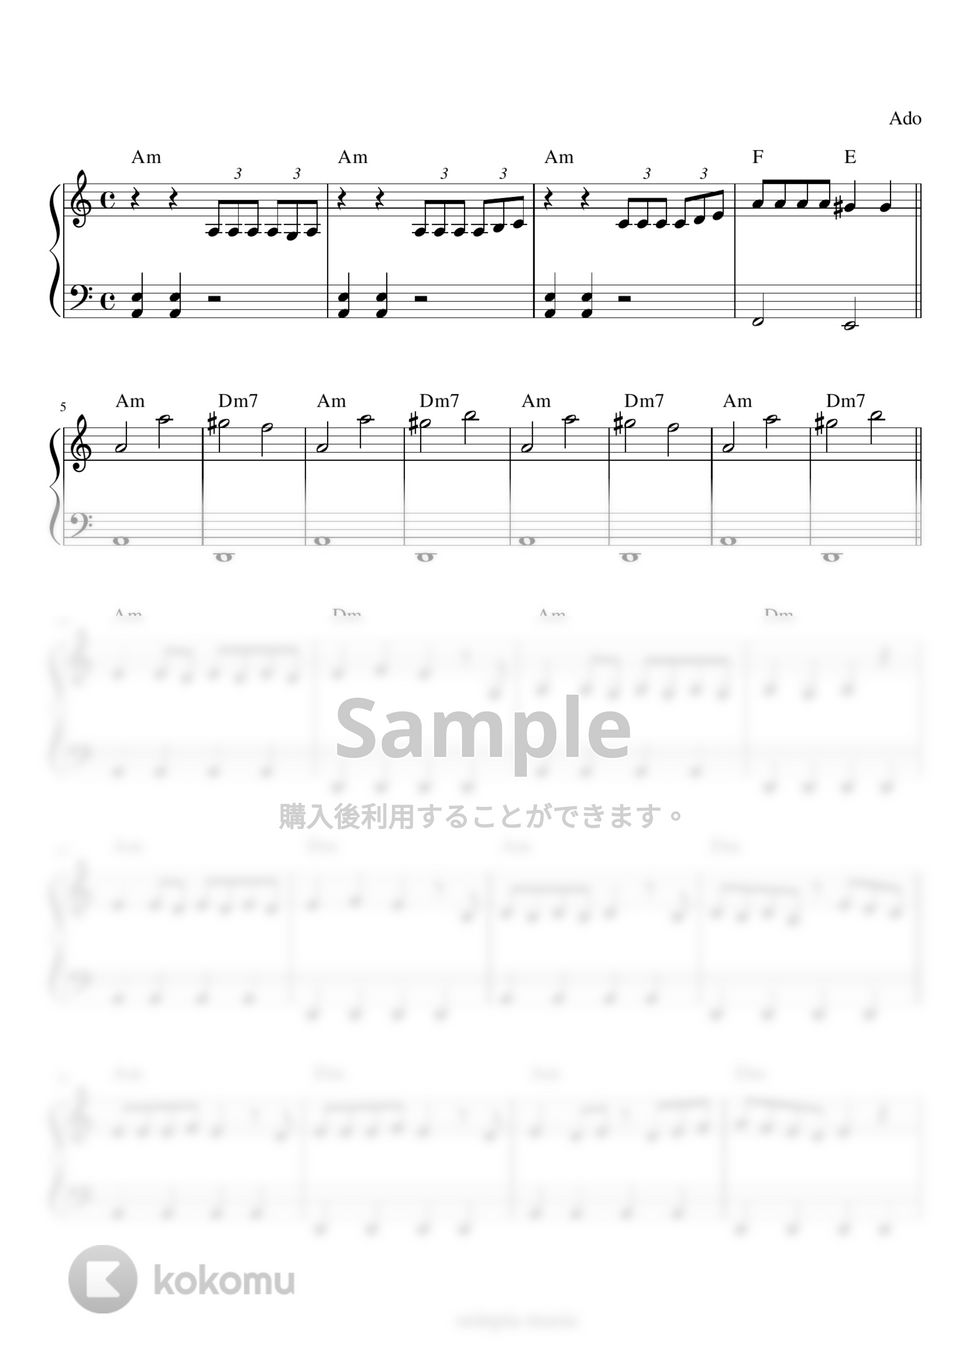 Ado - うっせぇわ (初級 / 簡単 / レッスン / コード付き / 歌詞付き) by orinpia music